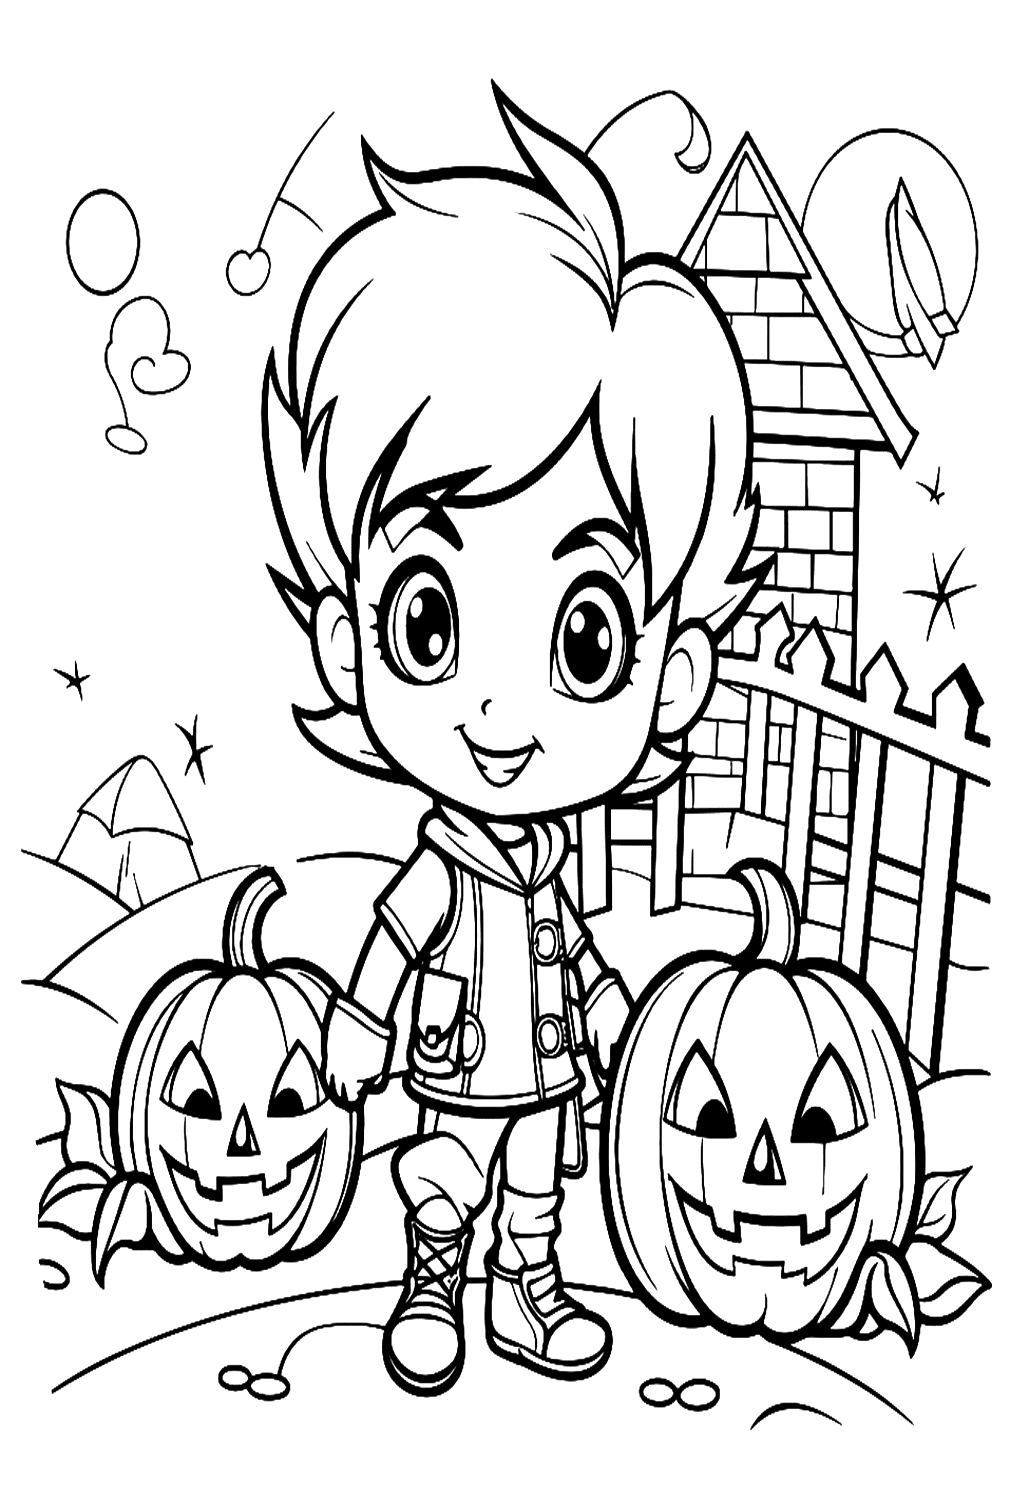 Jack O’ Lantern Pumpkin Coloring Pages